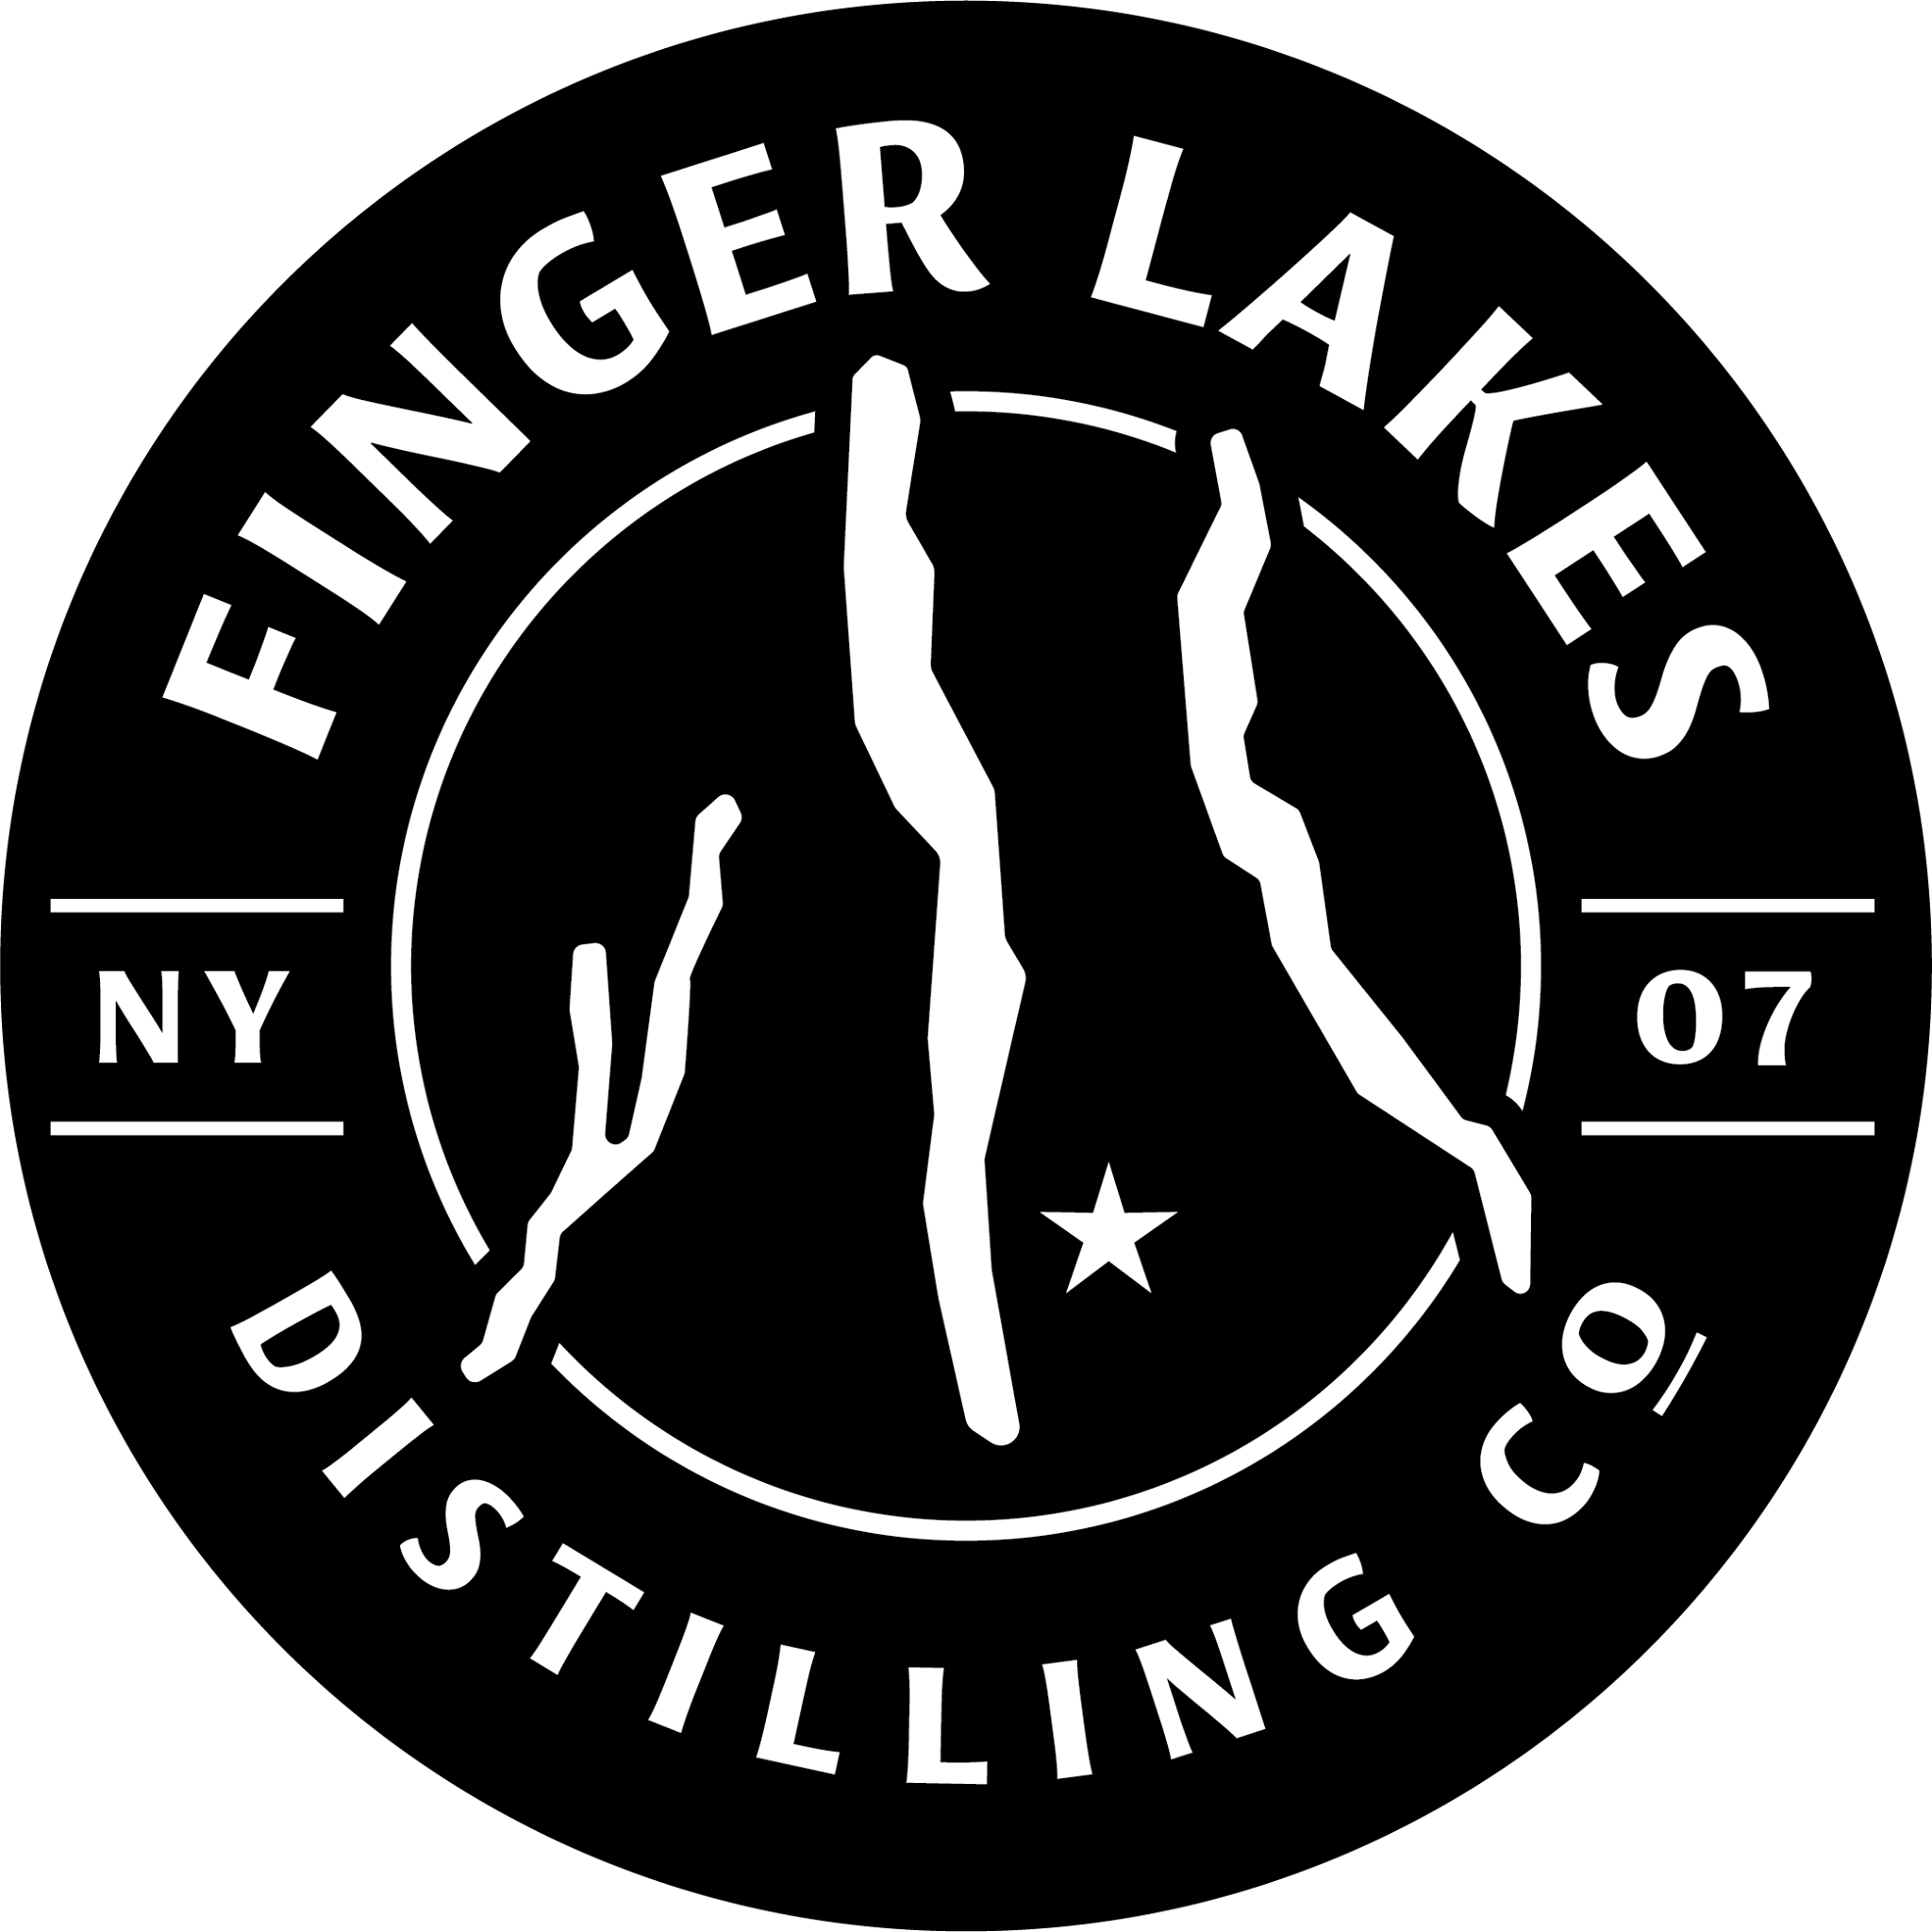 Finger Lakes Distilling logo